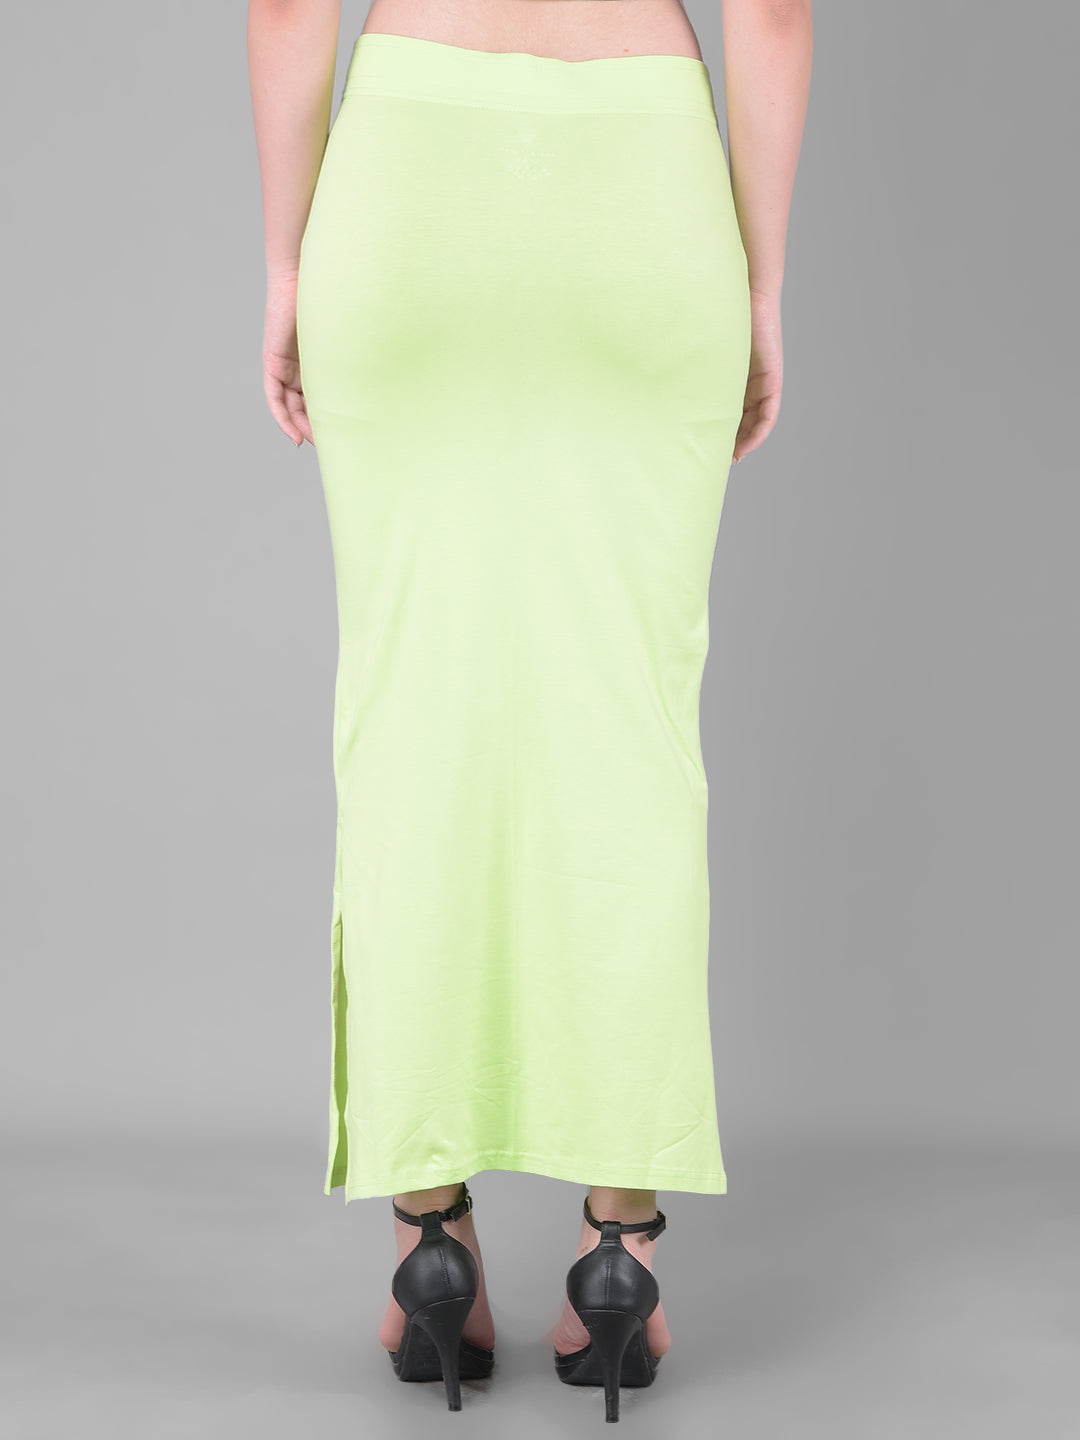 Comfort Lady Saree Shapewear 2 Pcs (Green and Indigo) Cotton Blend